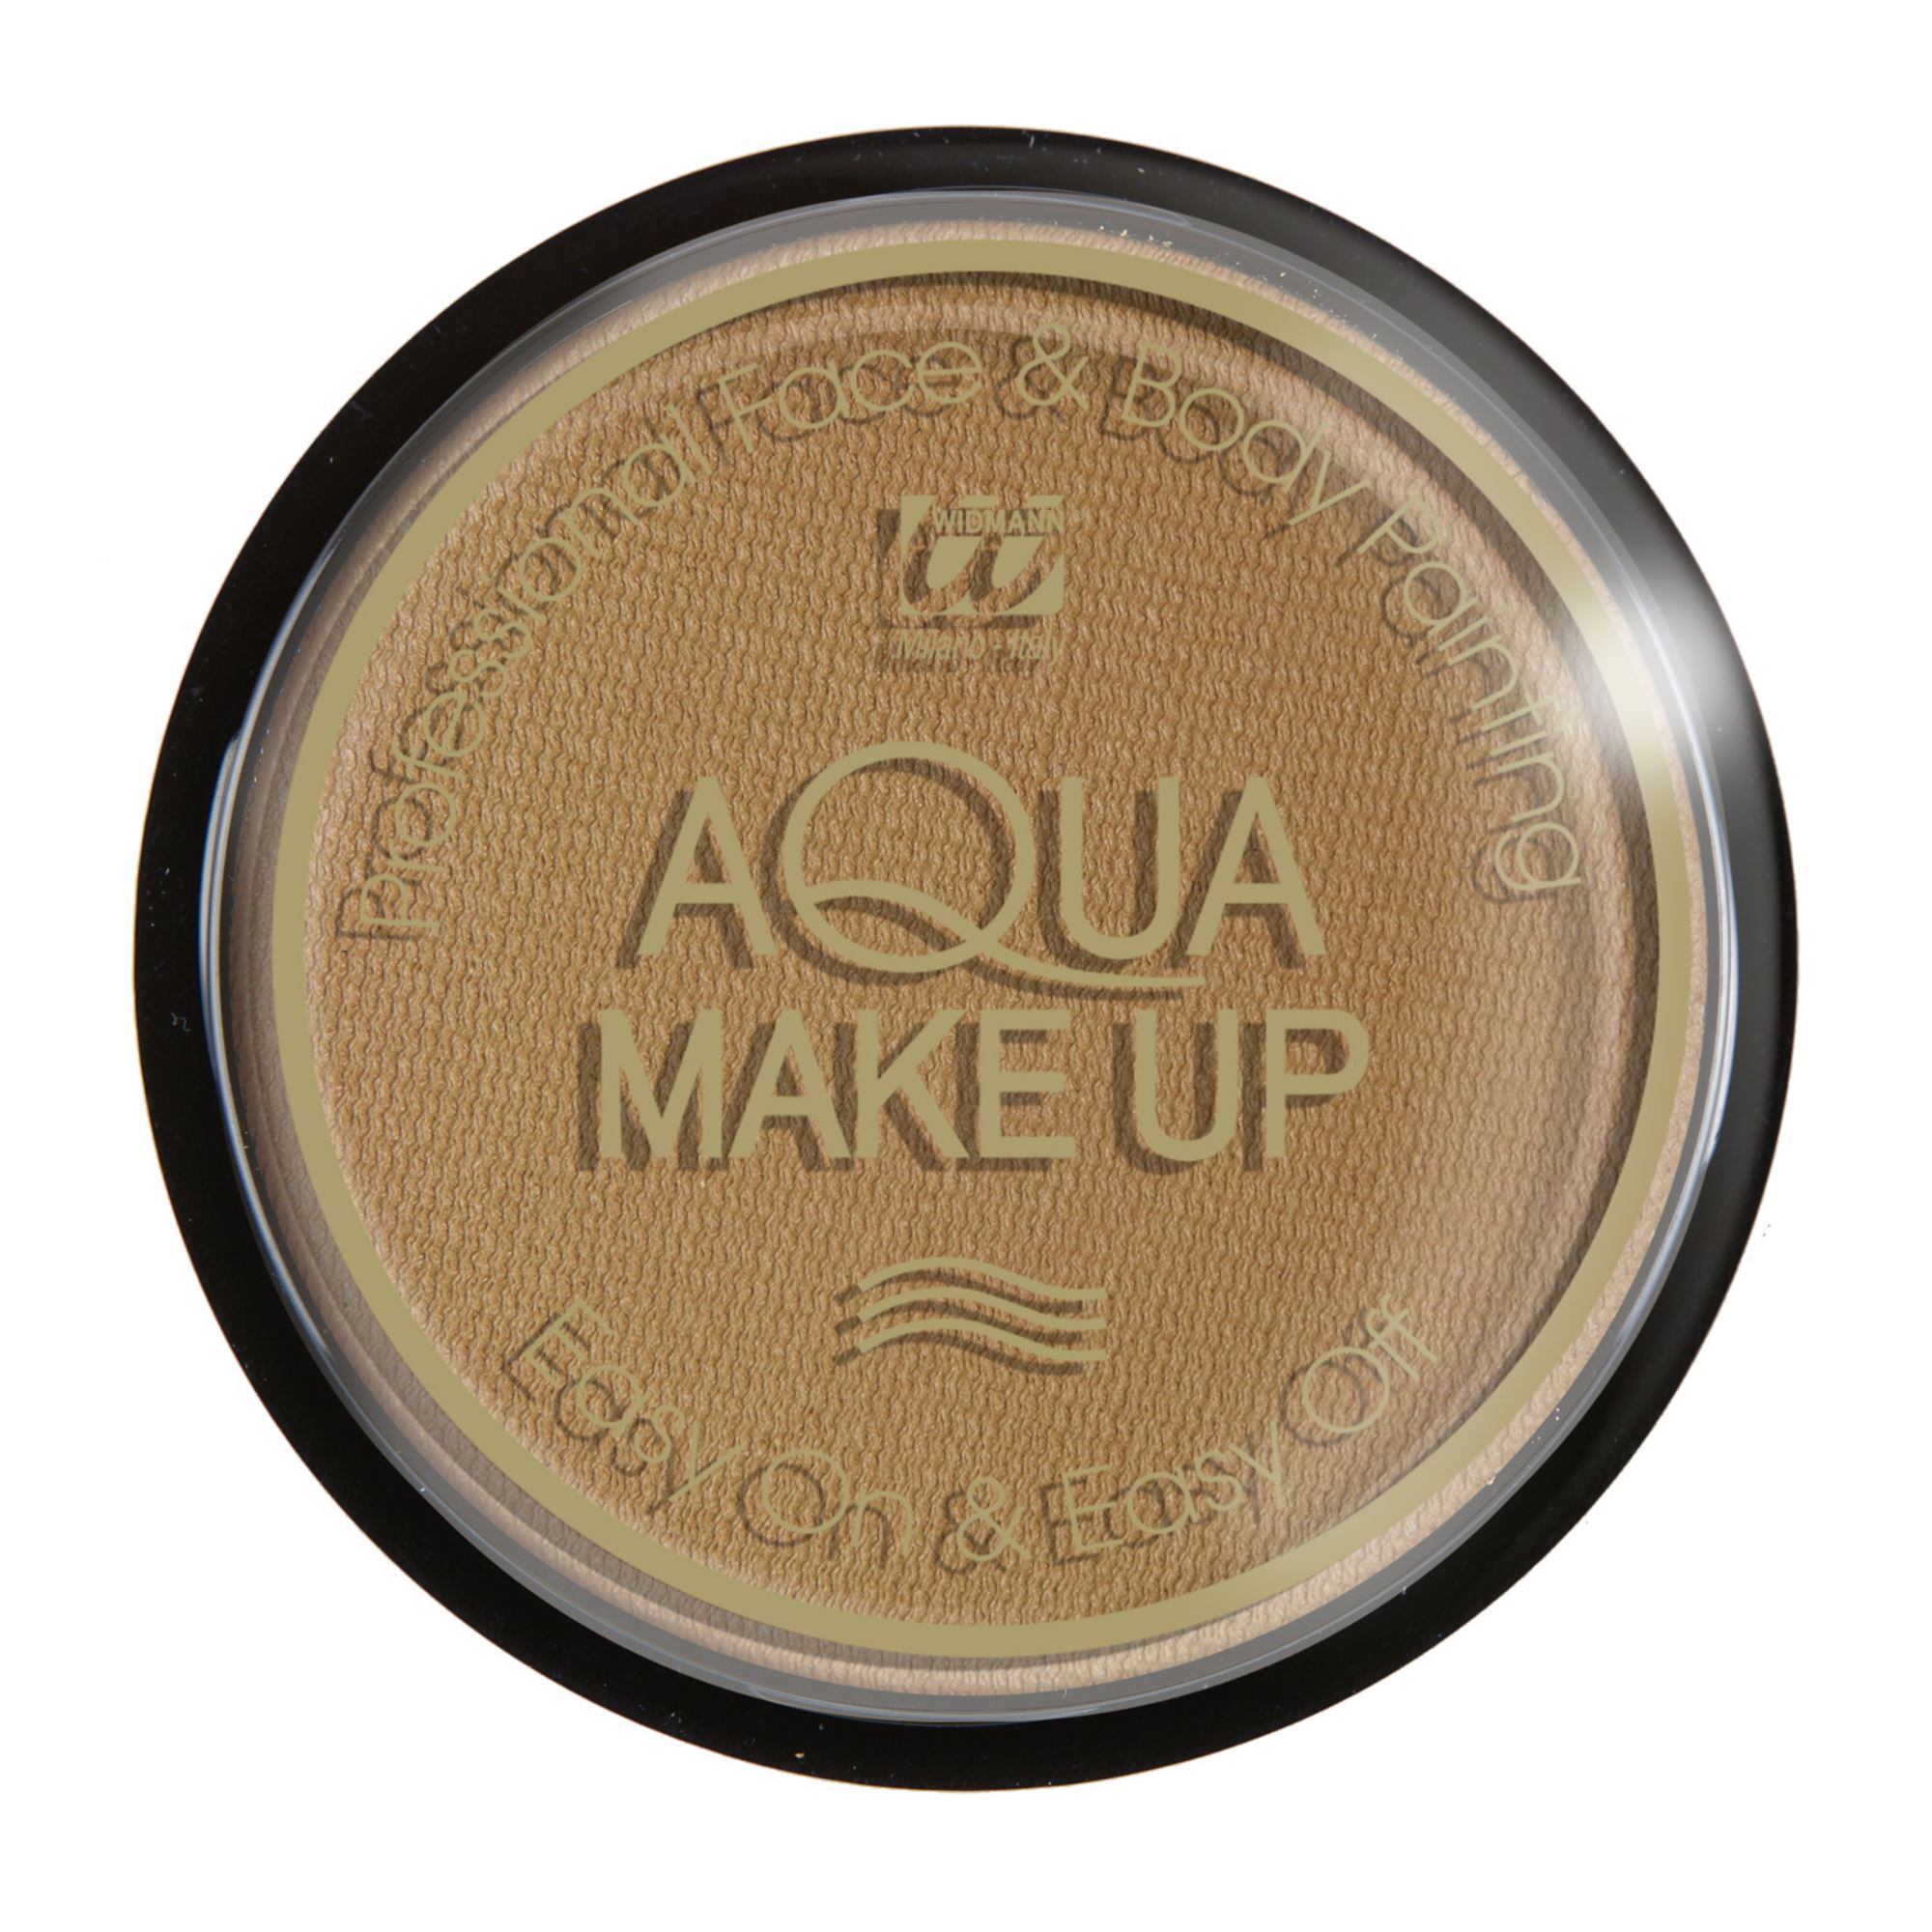 Aqua make-up 15 gram donker beige